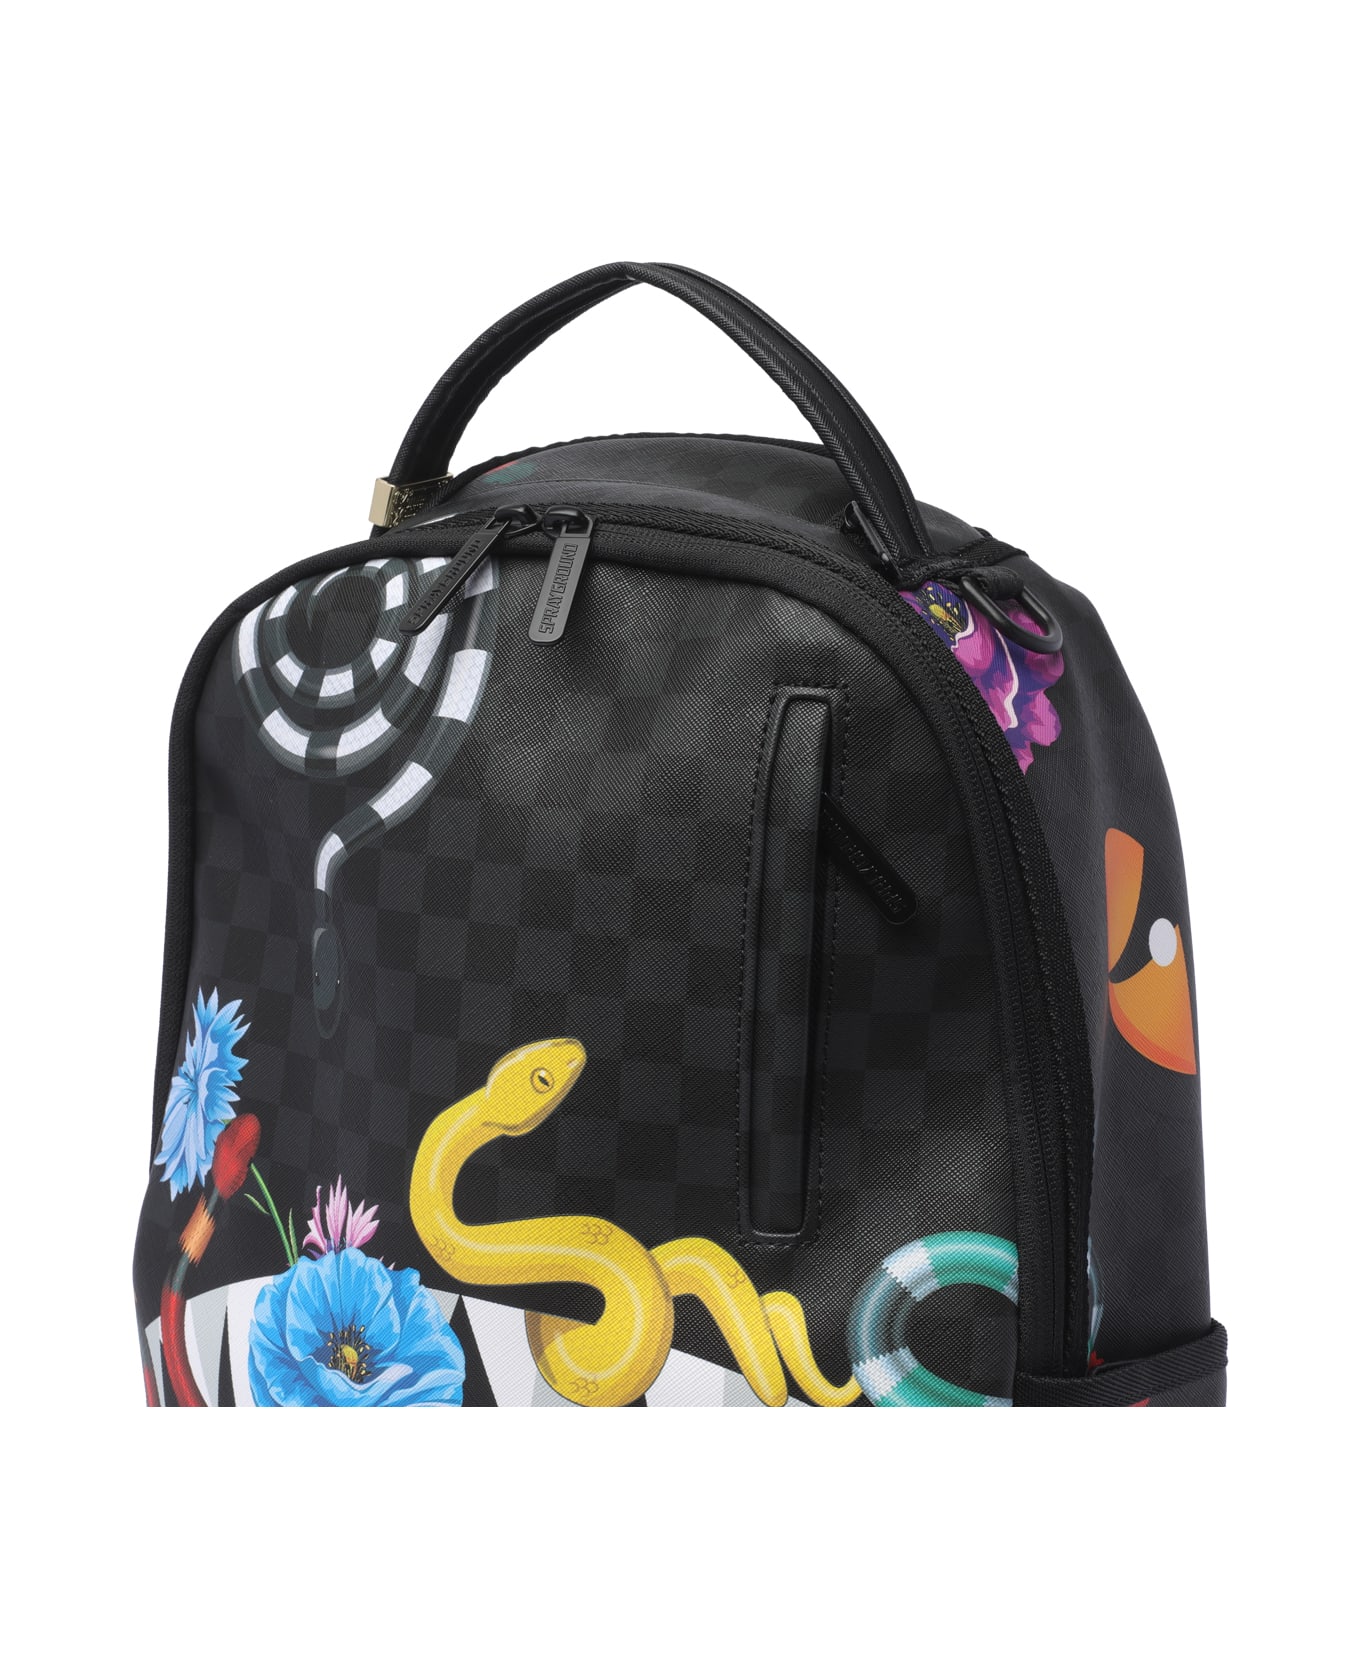 Sprayground Snakes On A Bag Backpack - Black バックパック